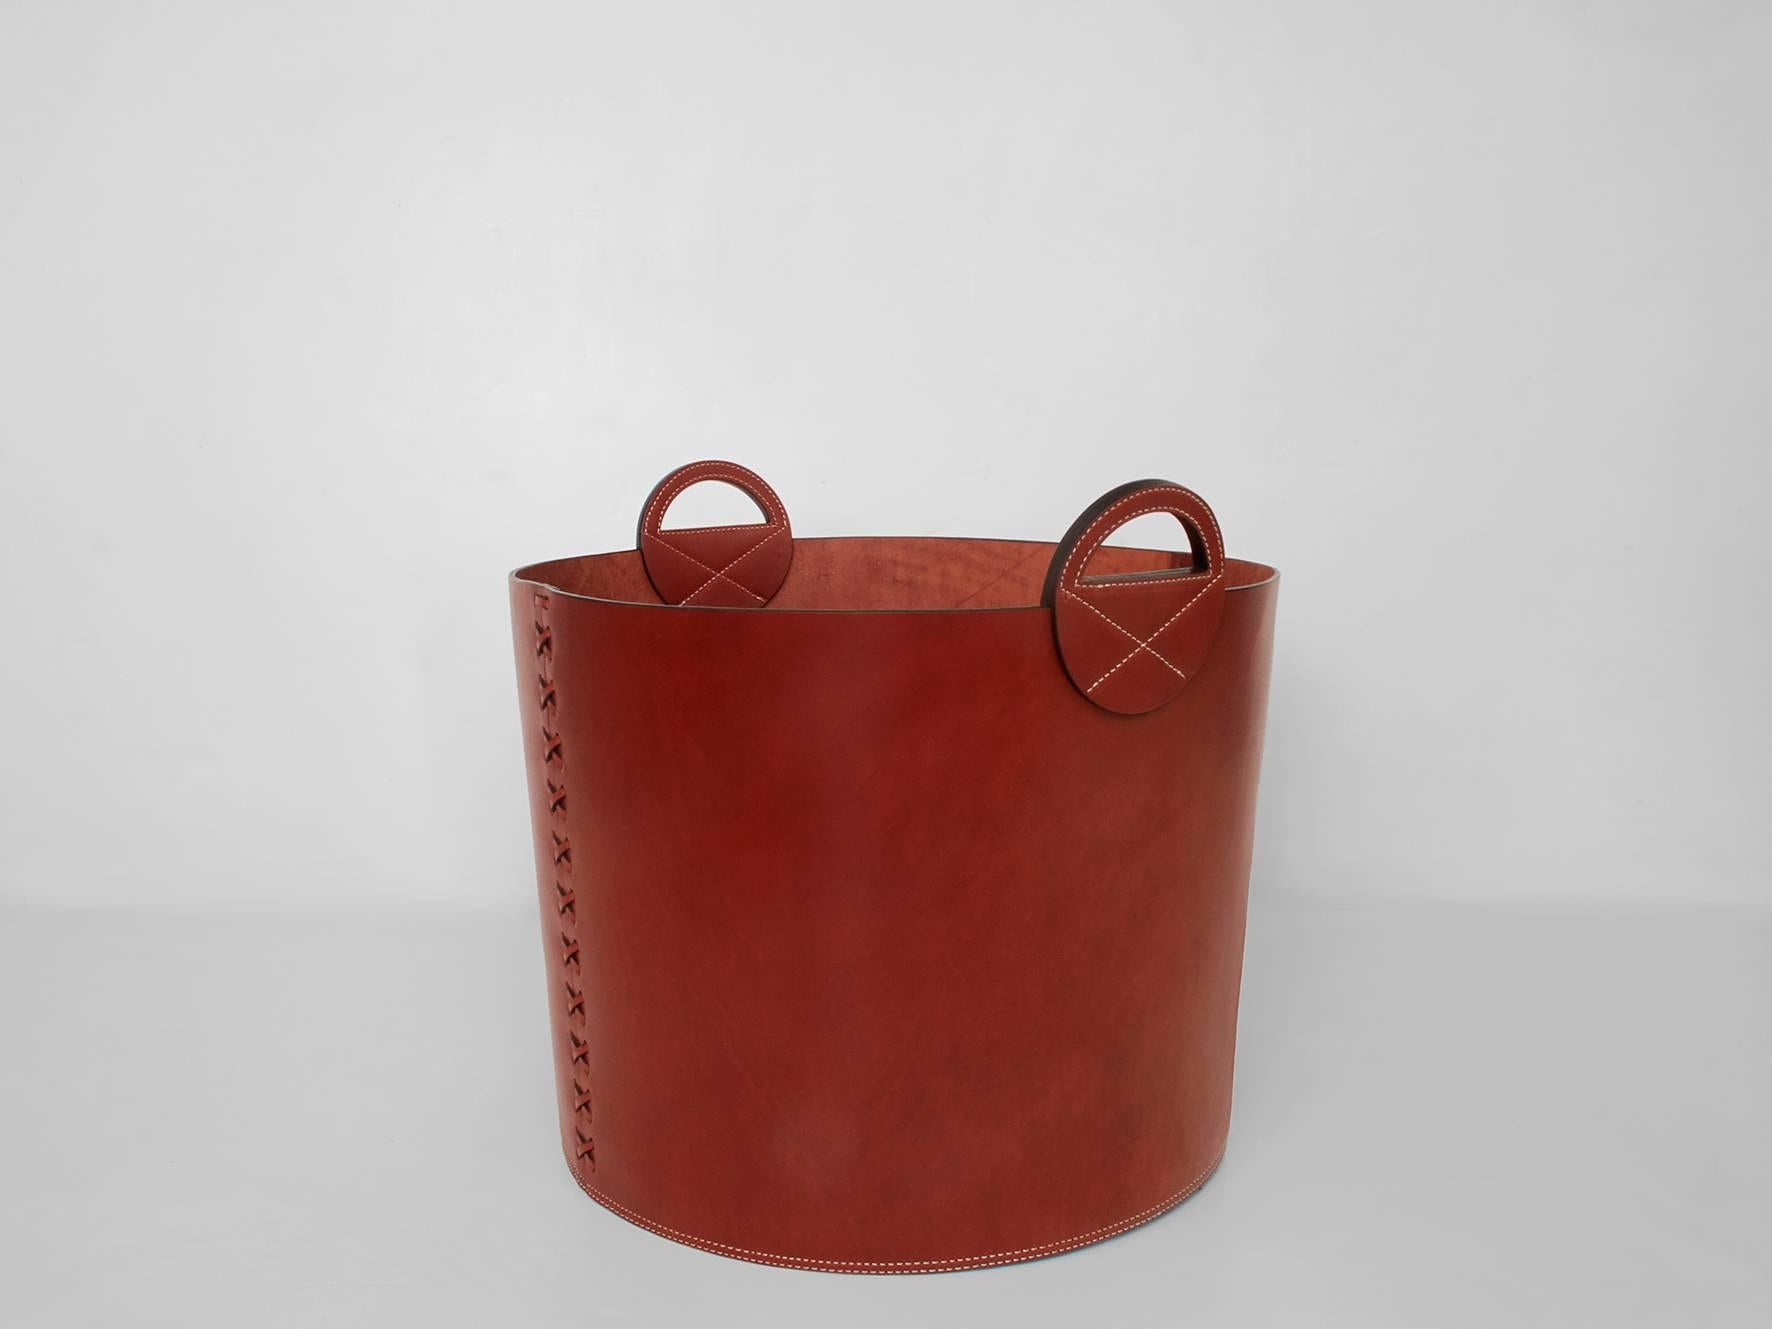 American Leather Bushel Basket with White Oak or Aromatic Cedar Bottom For Sale